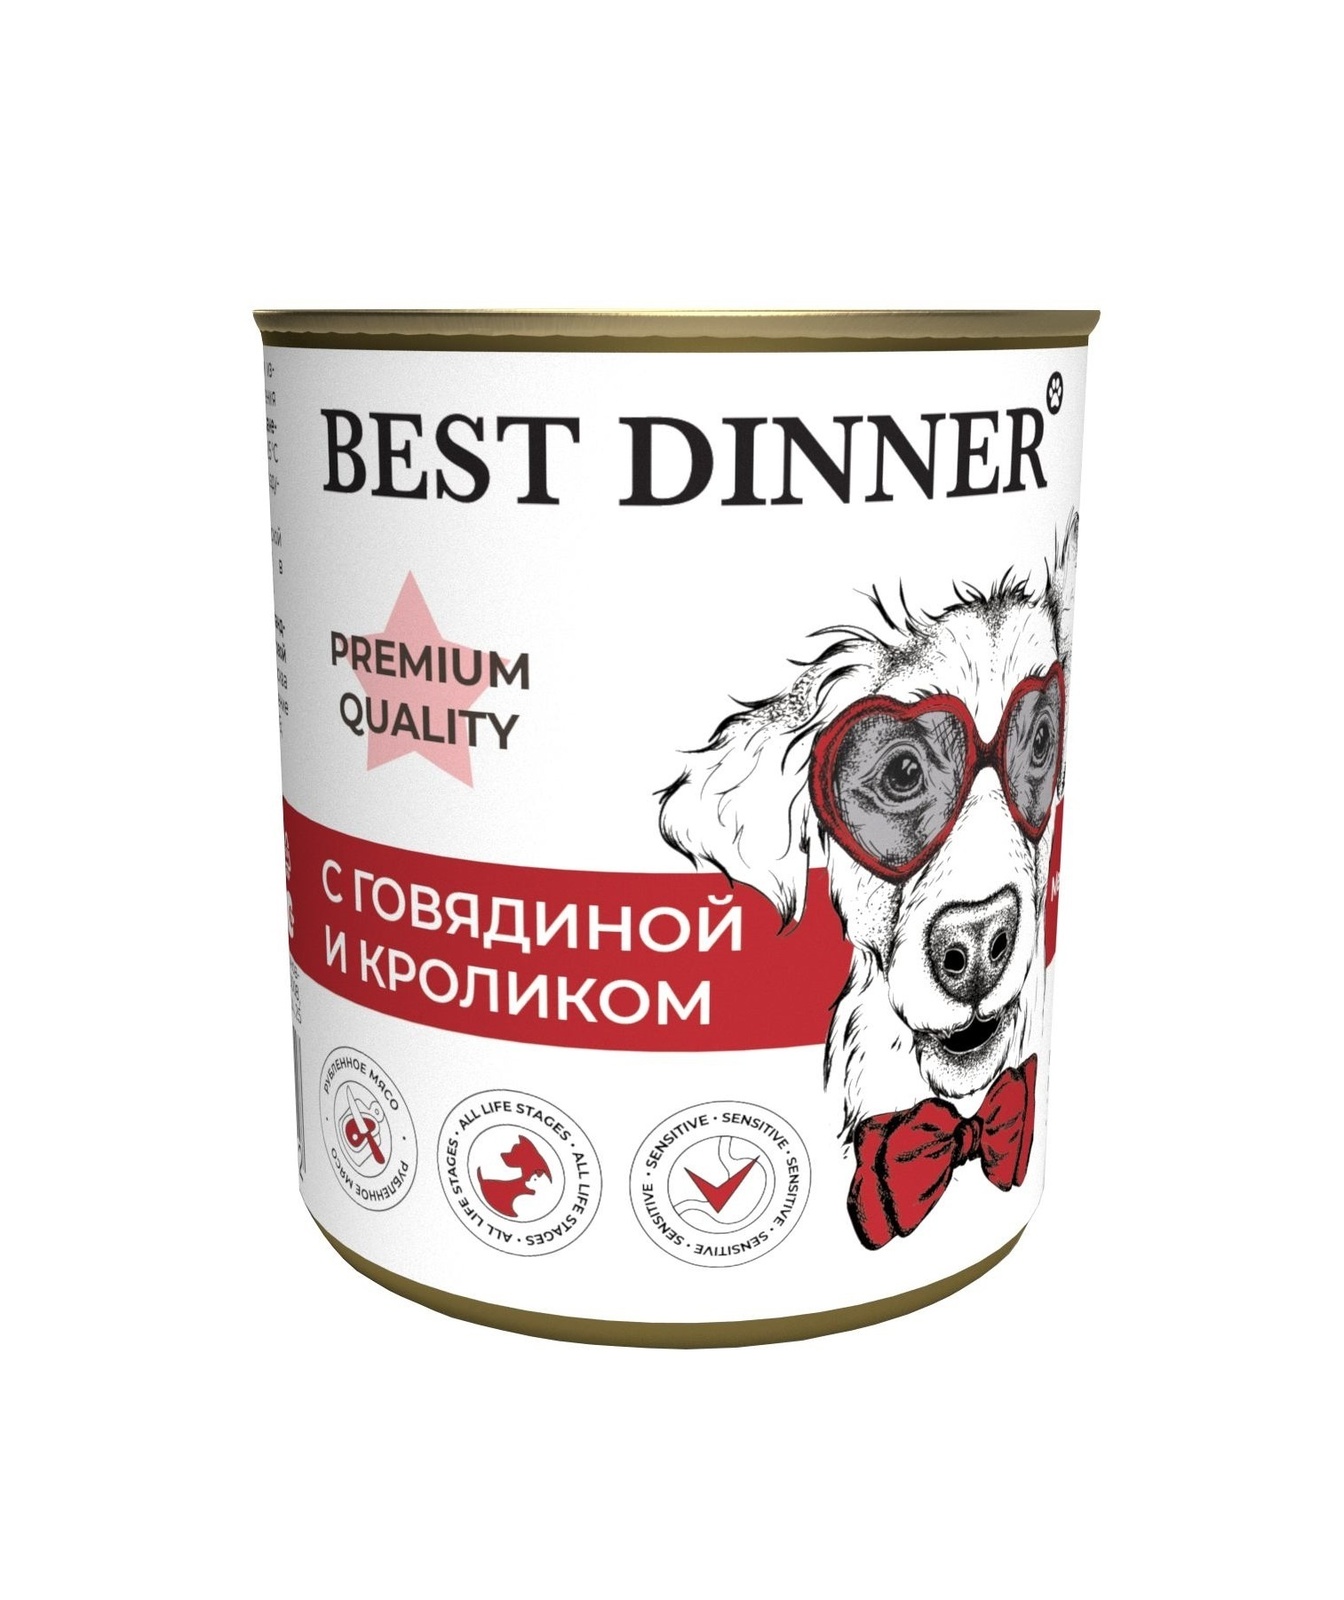 Best Dinner Best Dinner консервы Premium меню №3 С говядиной и кроликом (340 г) best dinner best dinner консервы premium меню 3 с говядиной и кроликом 340 г